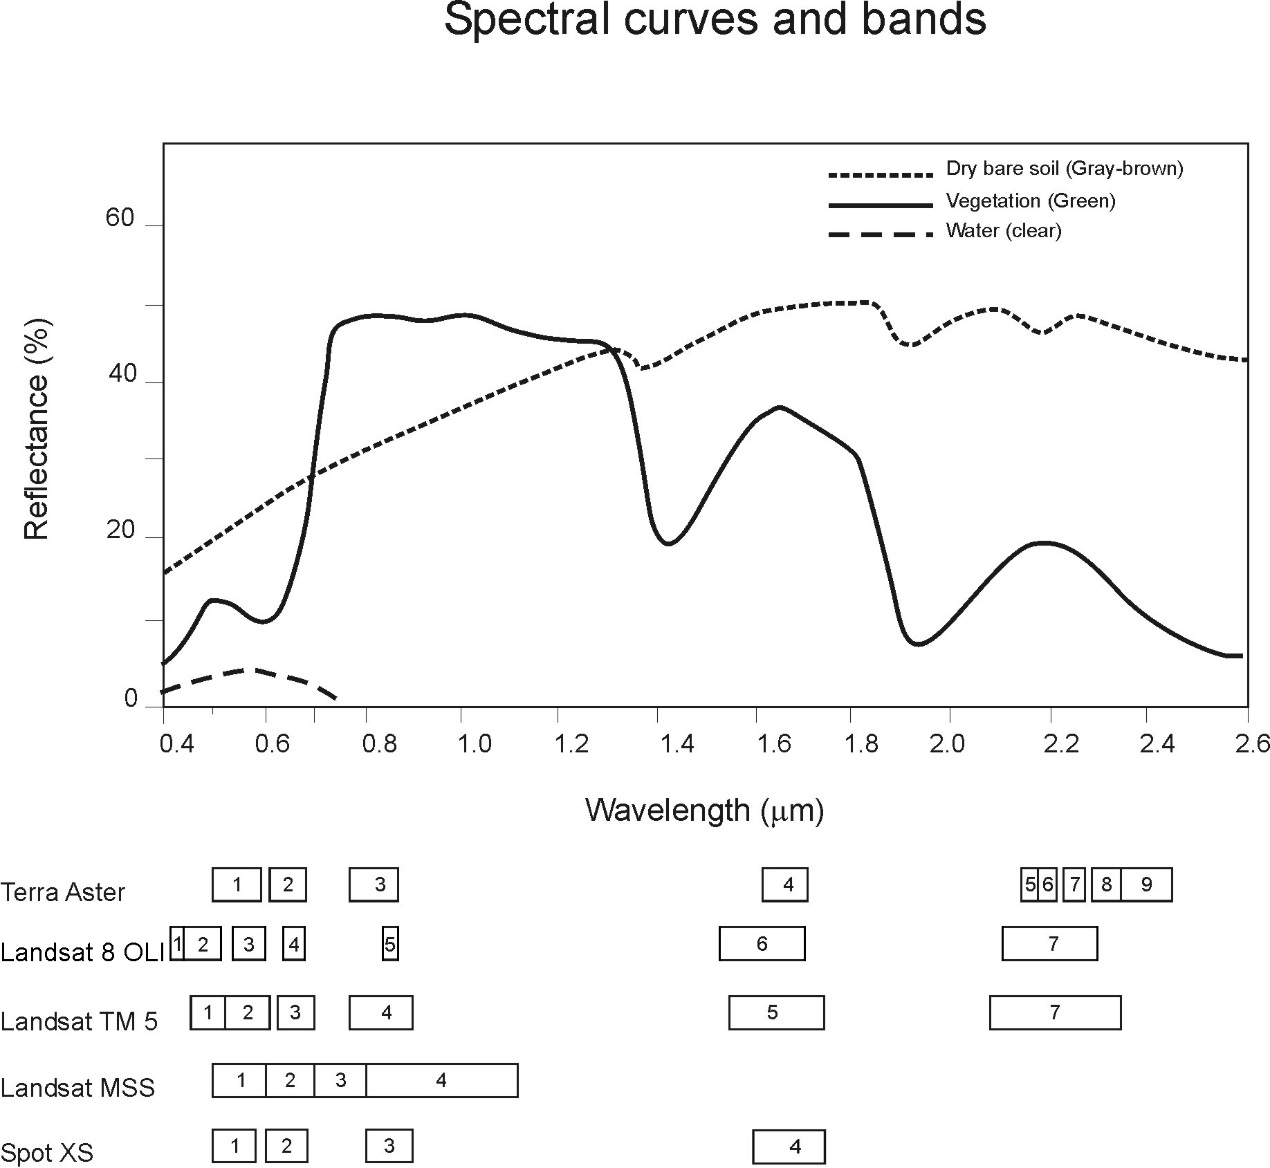 _images/spectral-curves-bands.png